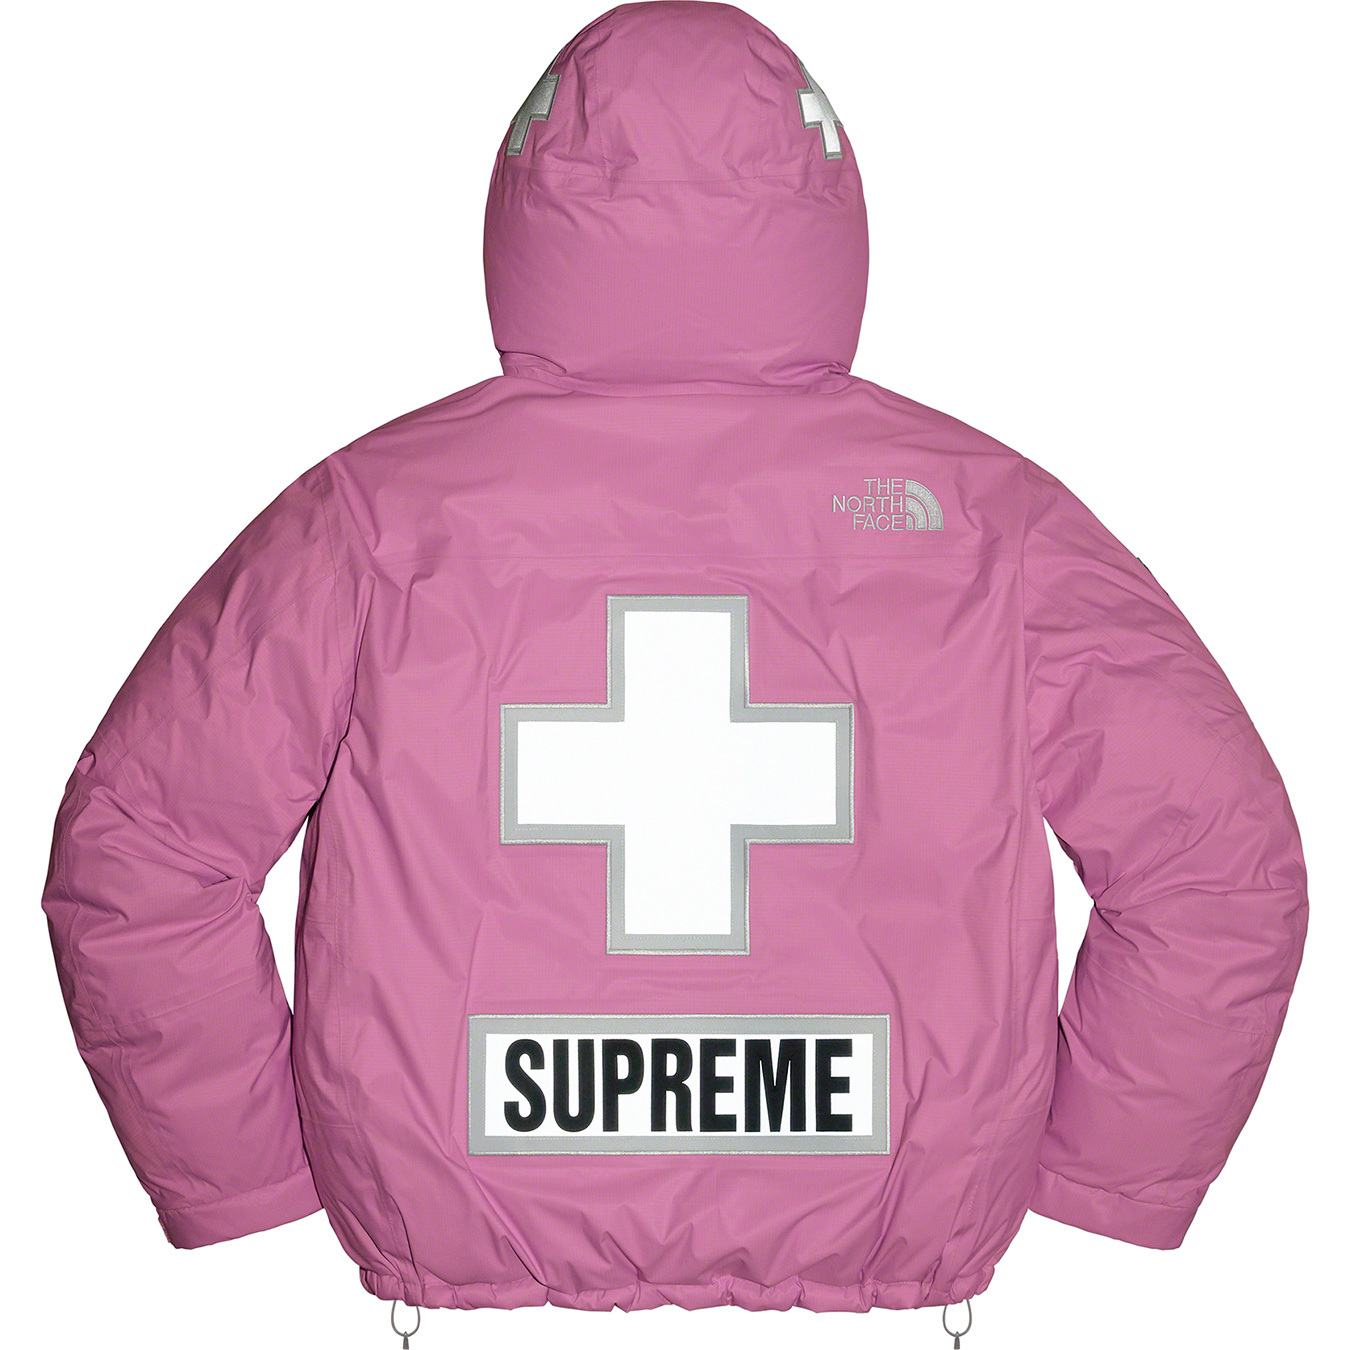 Supreme TNF Summit Series Rescue Baltoro Jacket